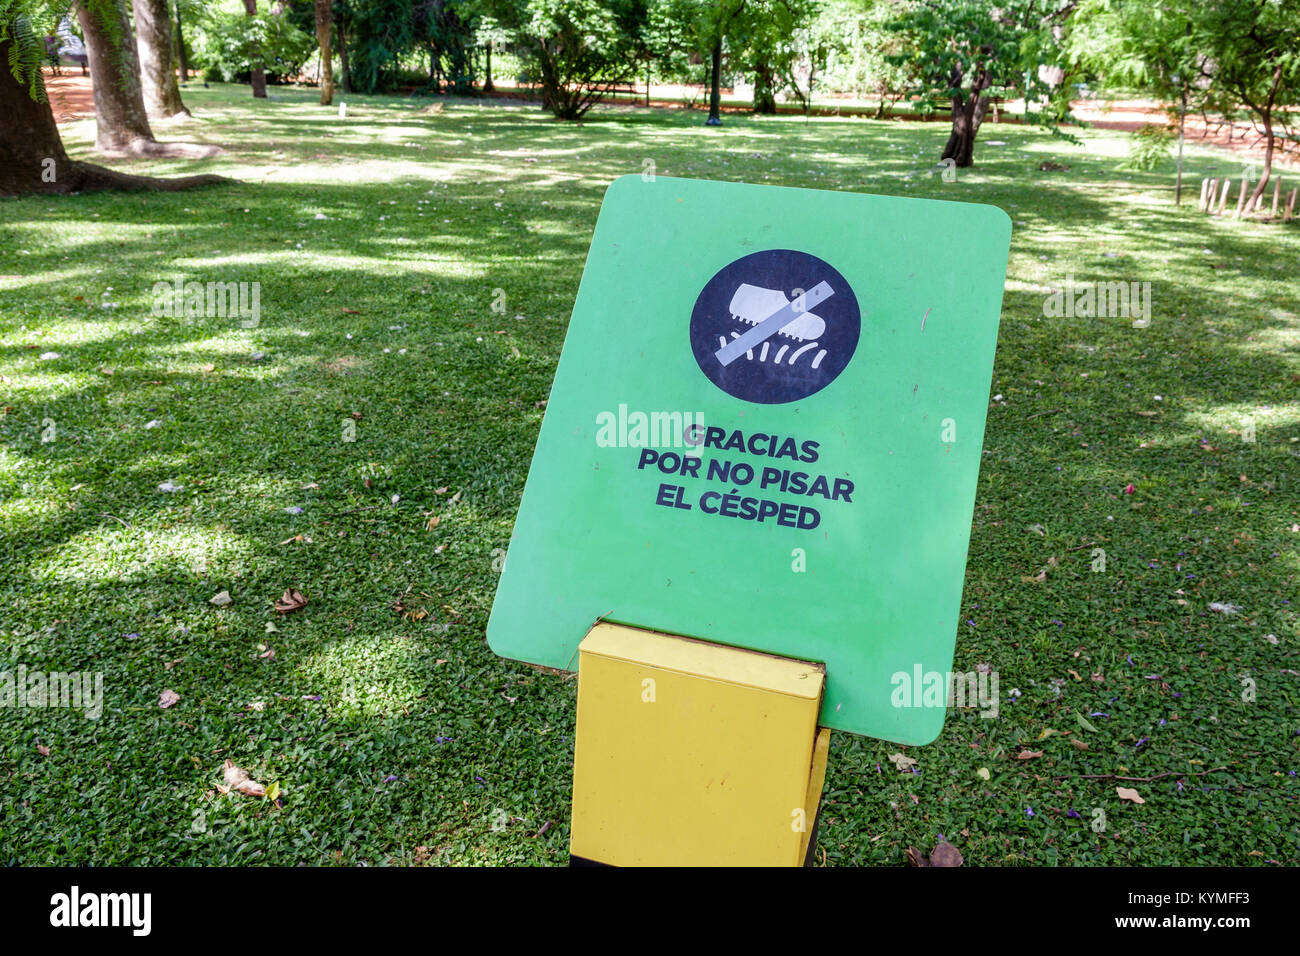 Buenos Aires Argentina,Palermo,park,Jardin Botanico Carlos Thays botanical garden,law,sign,do not step on grass,Spanish,sign,warning,Hispanic,ARG17111 Stock Photo